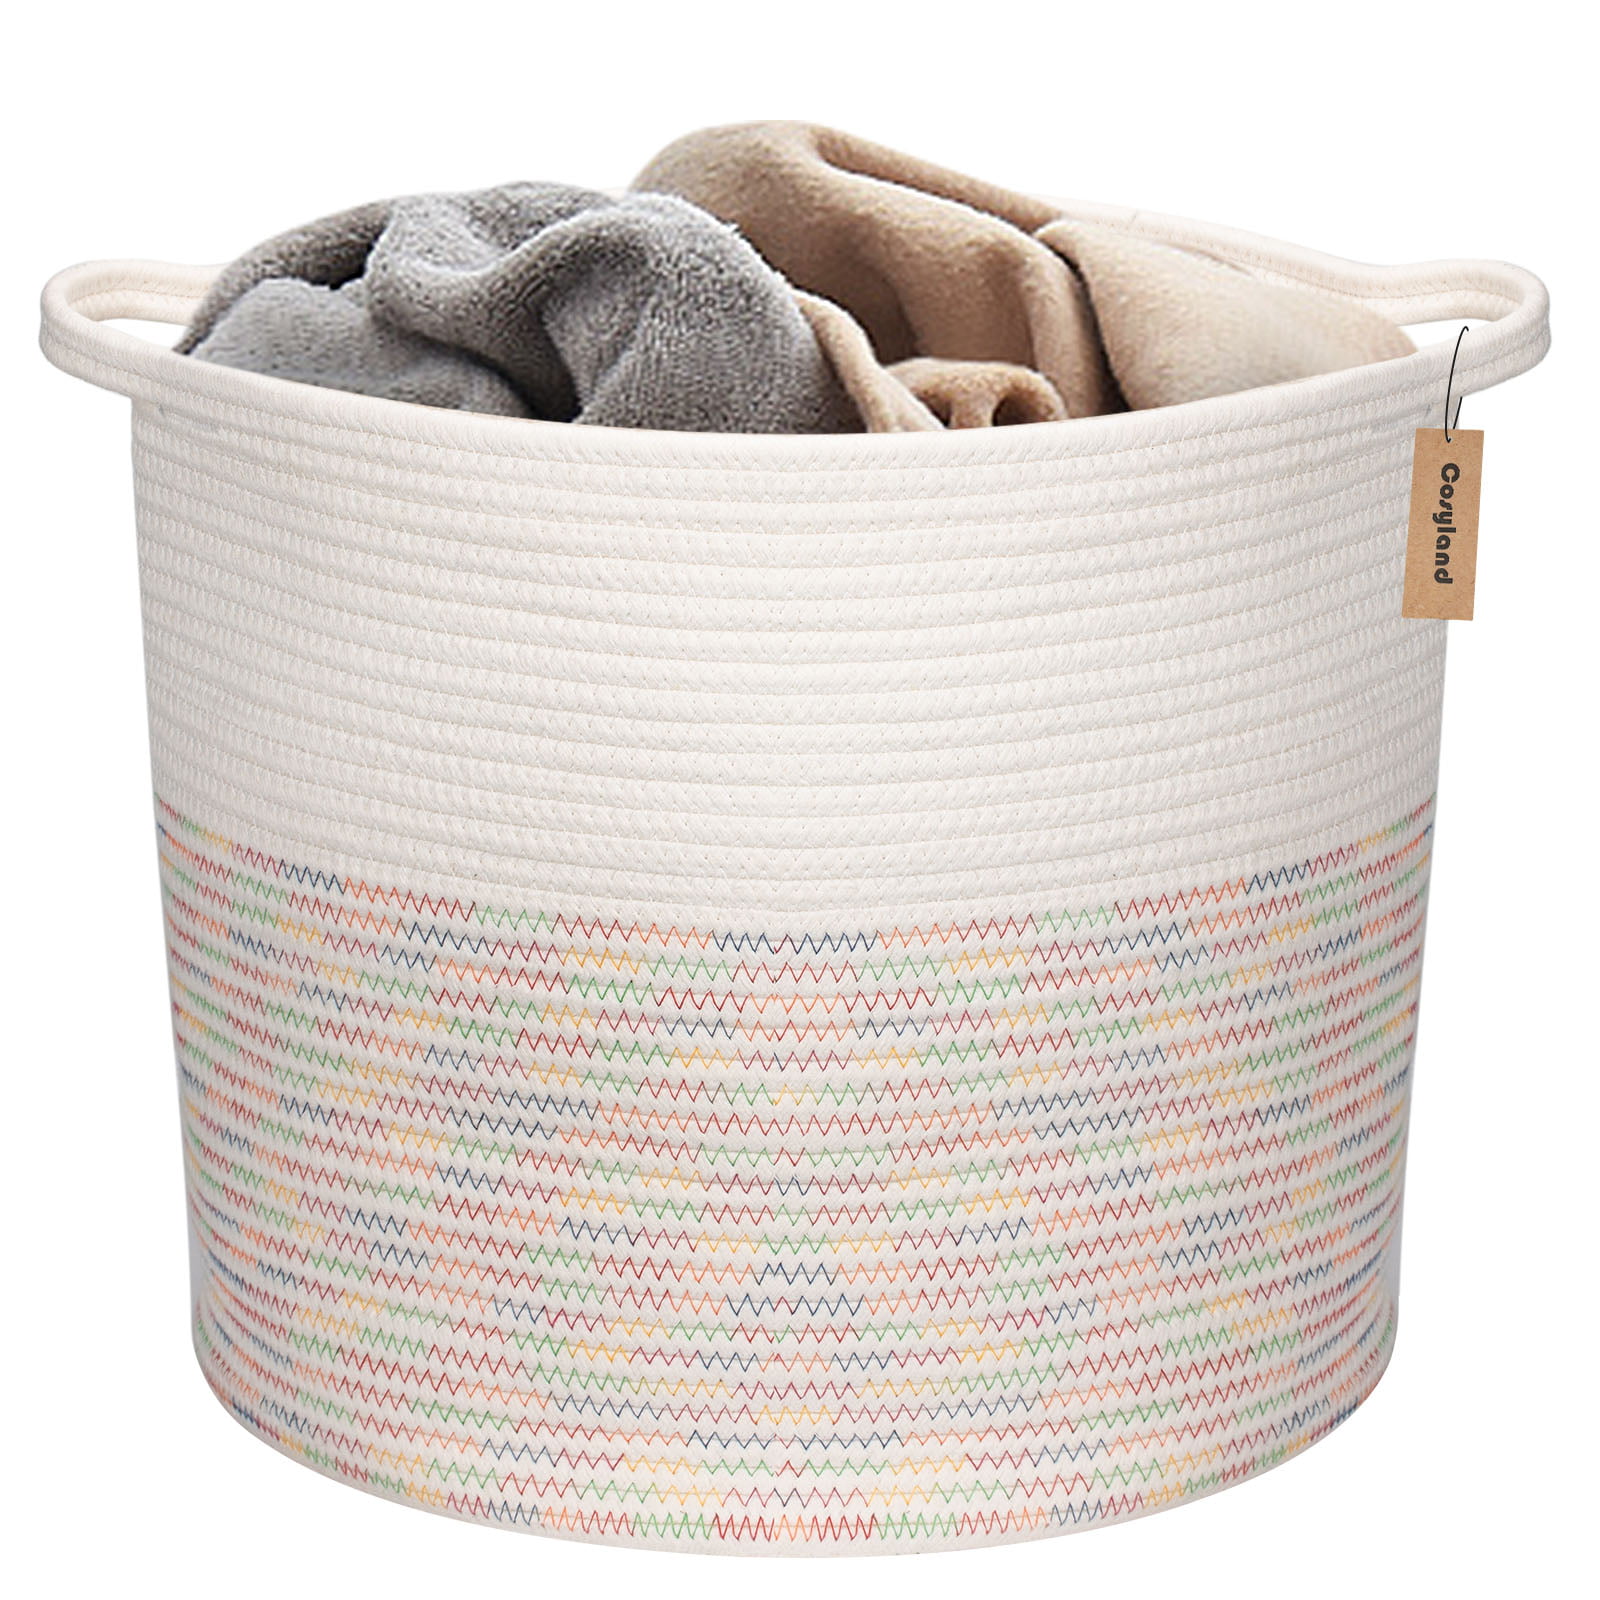 Woven Cotton Rope Basket,Large Toy Storage Organizer Blanket Basket Nursery 